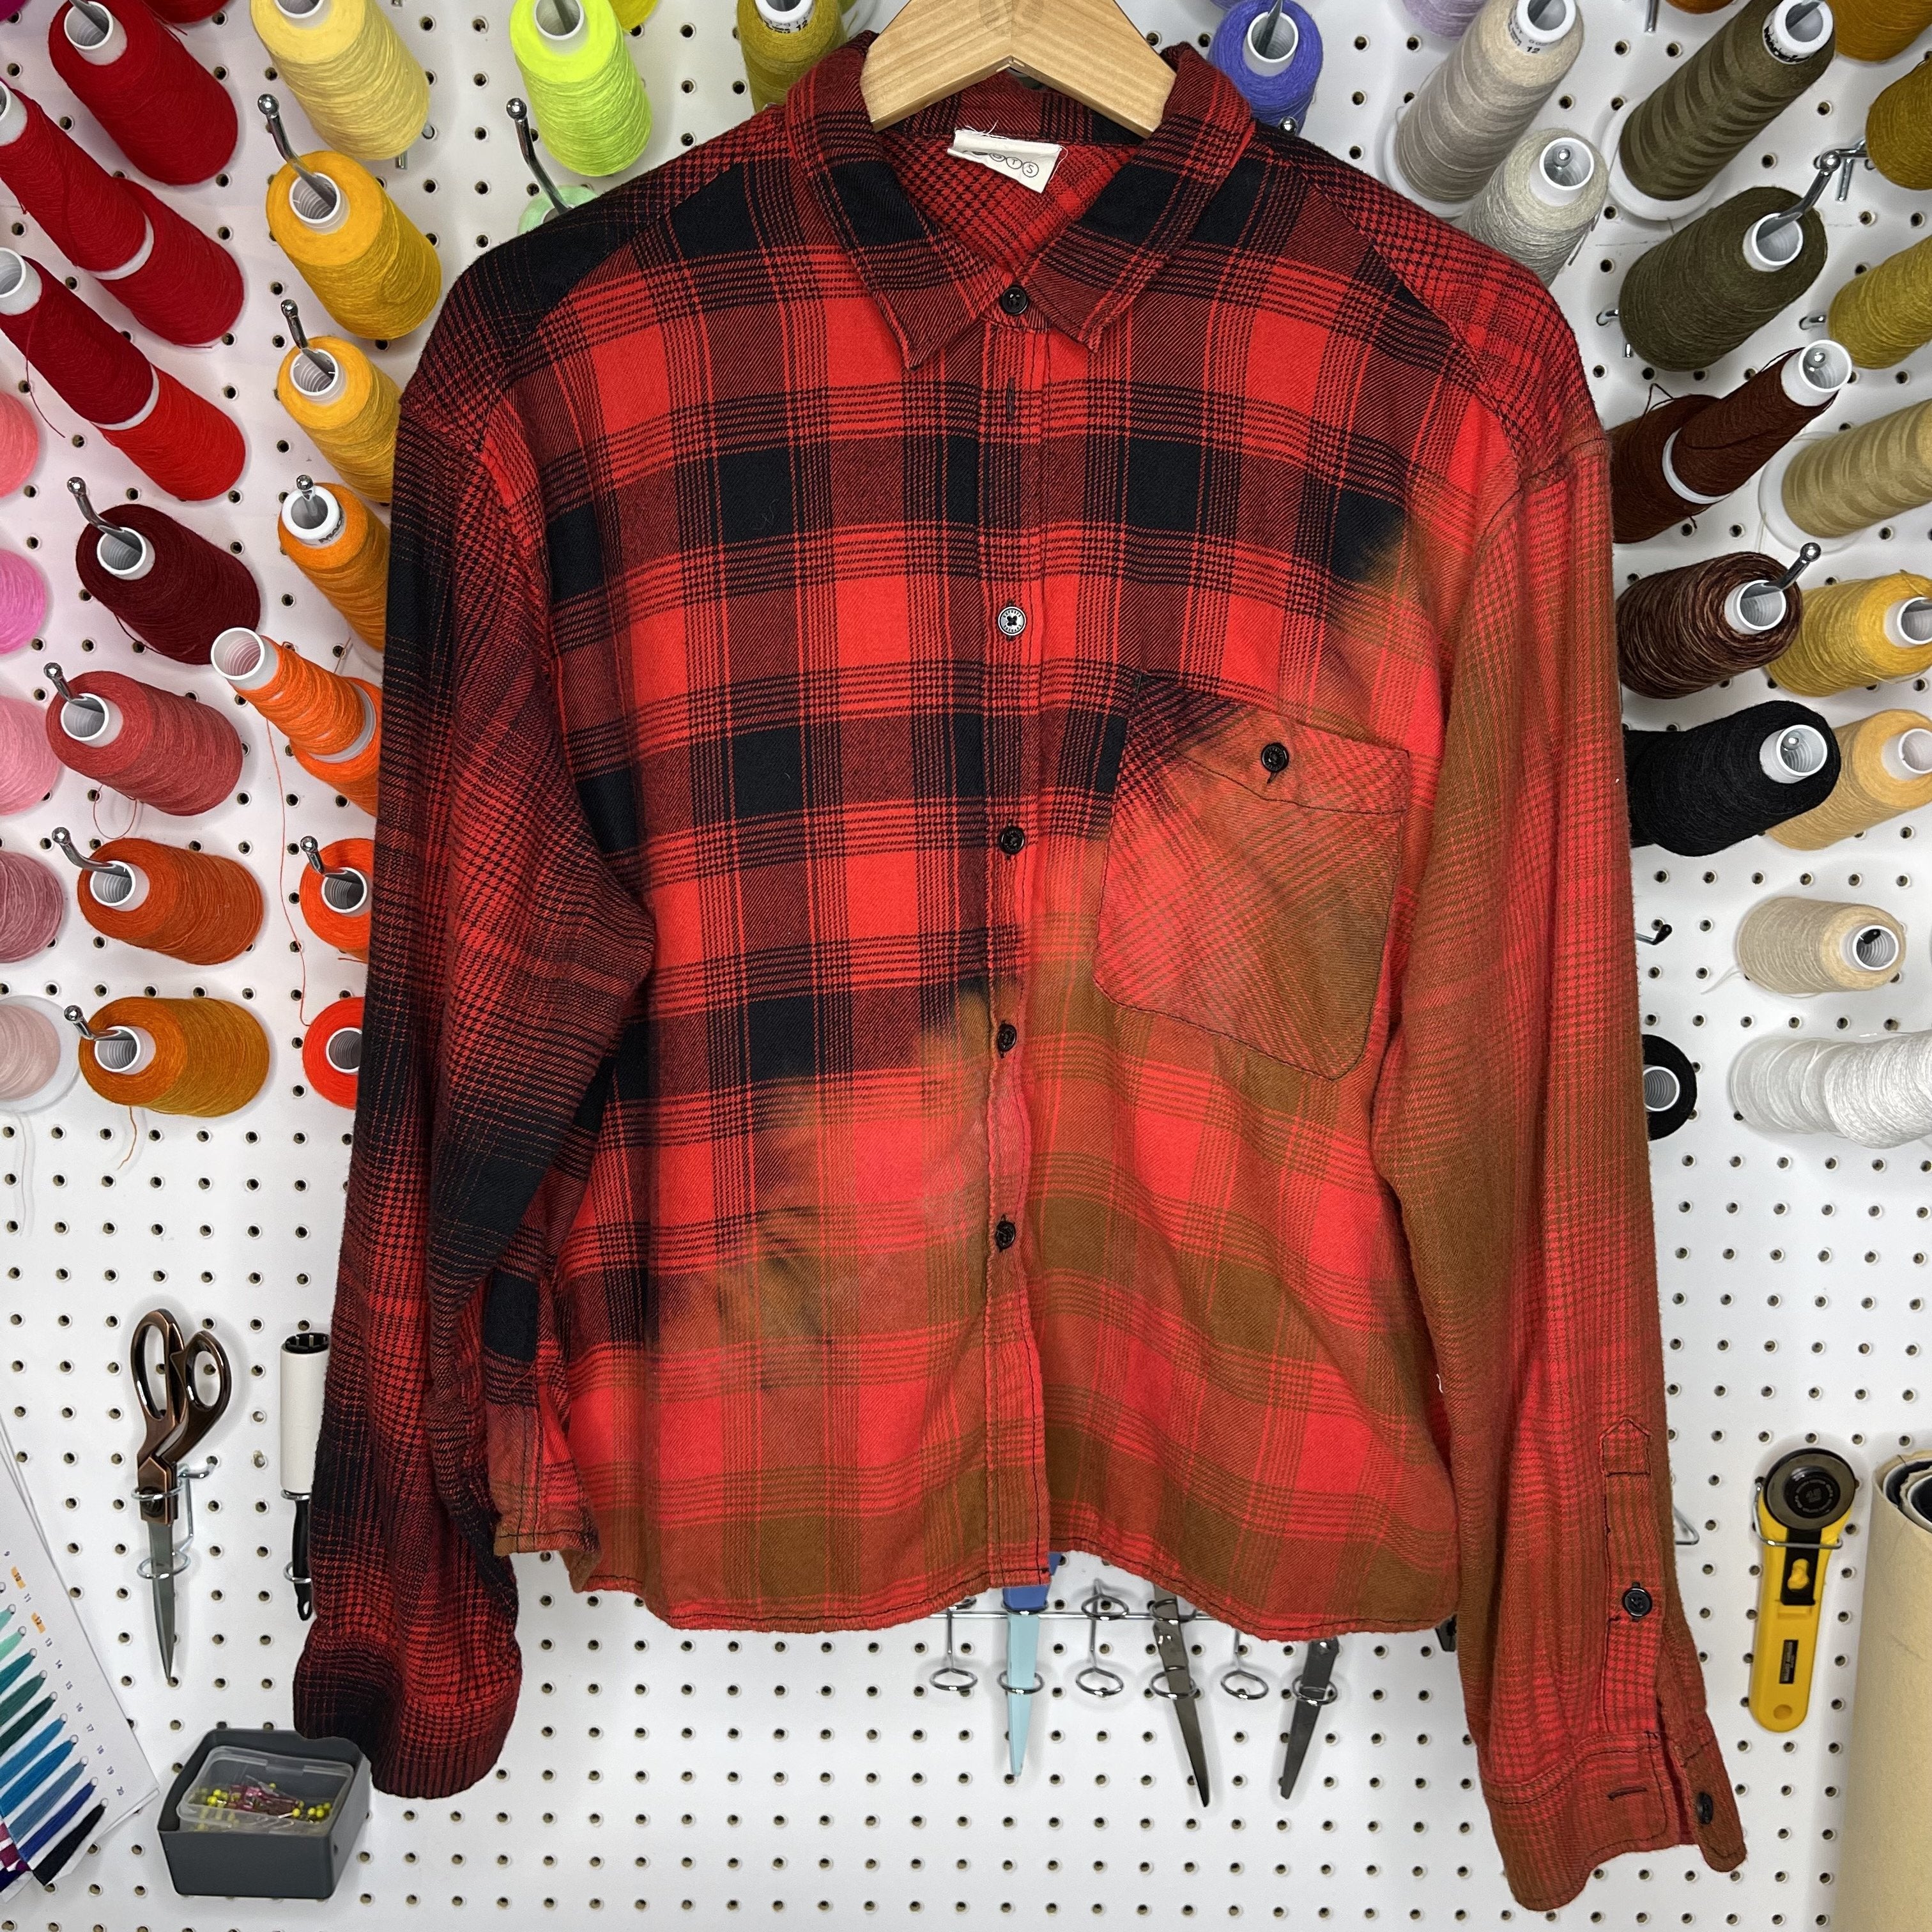 Denim Jacket - Medium - Red/Black Two-Toned Flannel - 4 DOTS